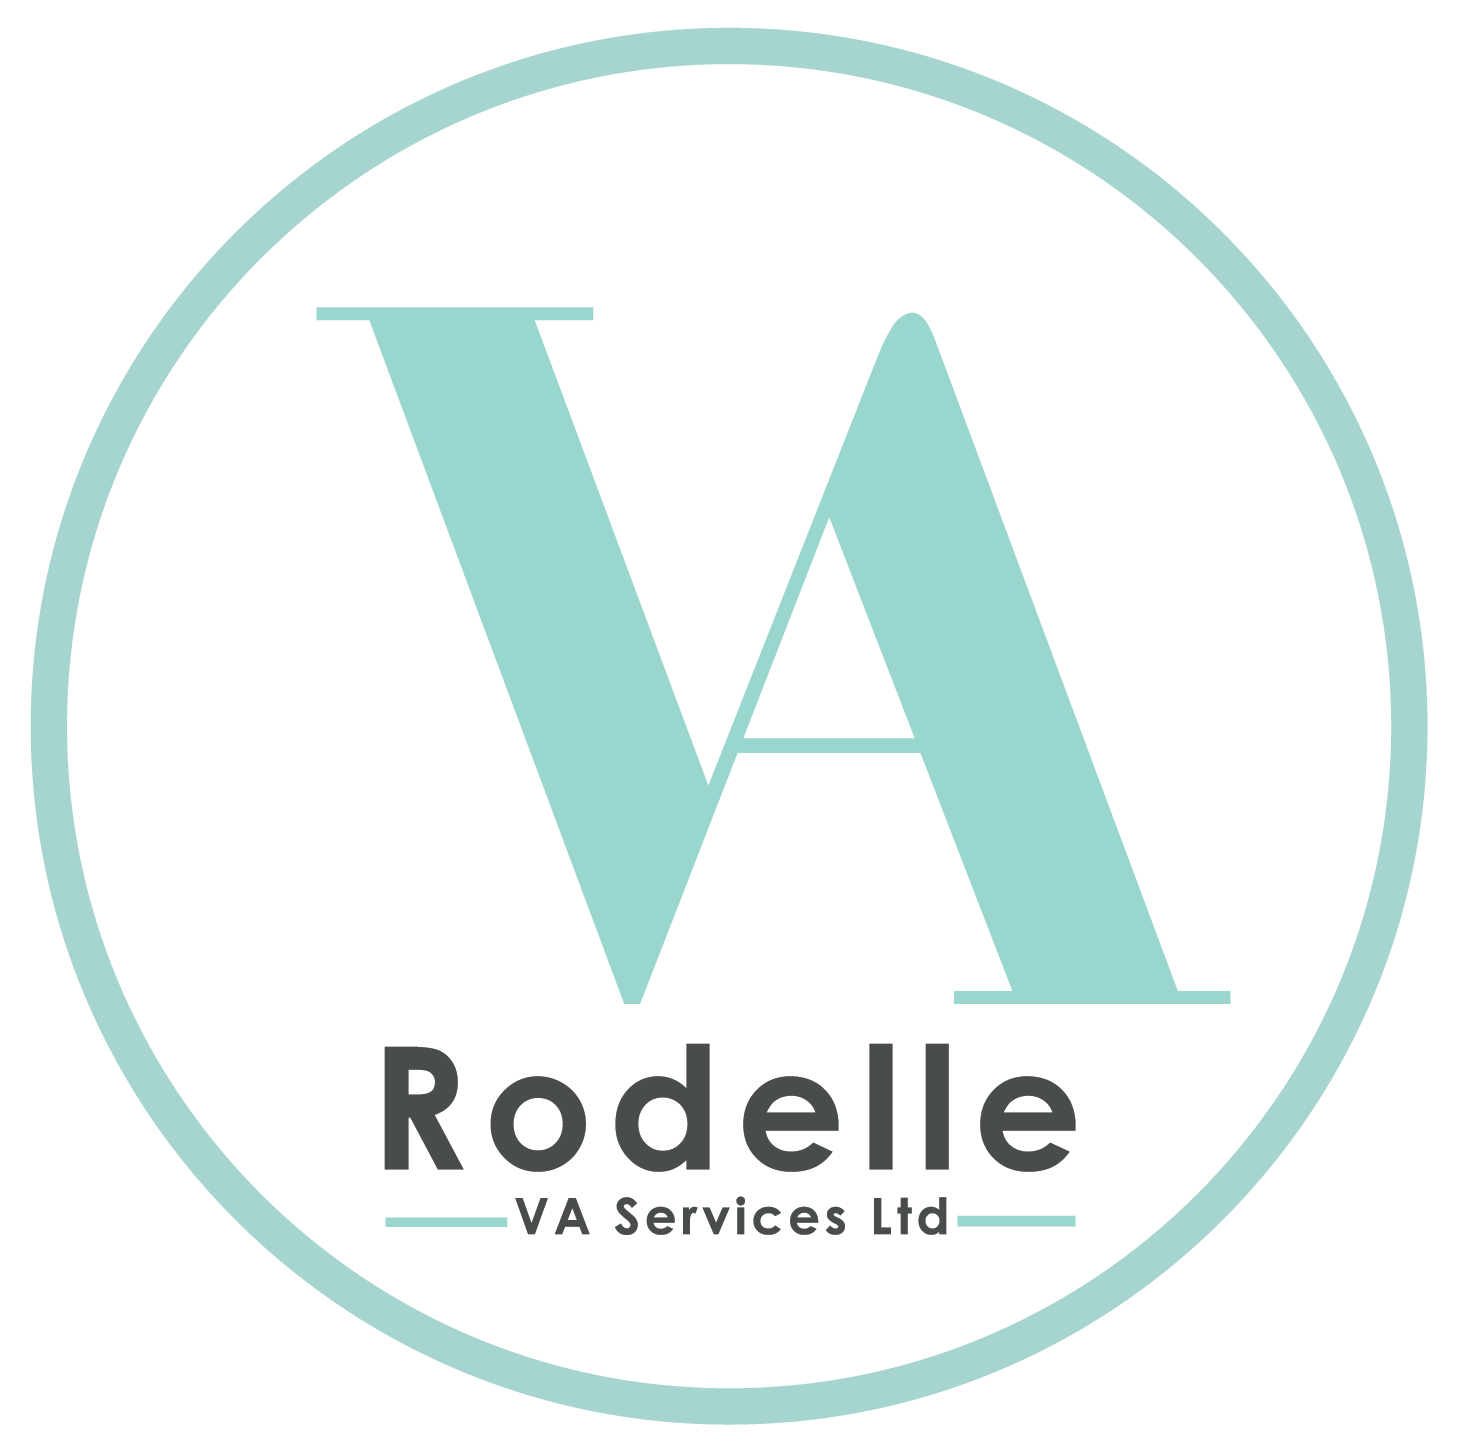 Rodelle VA Services Ltd